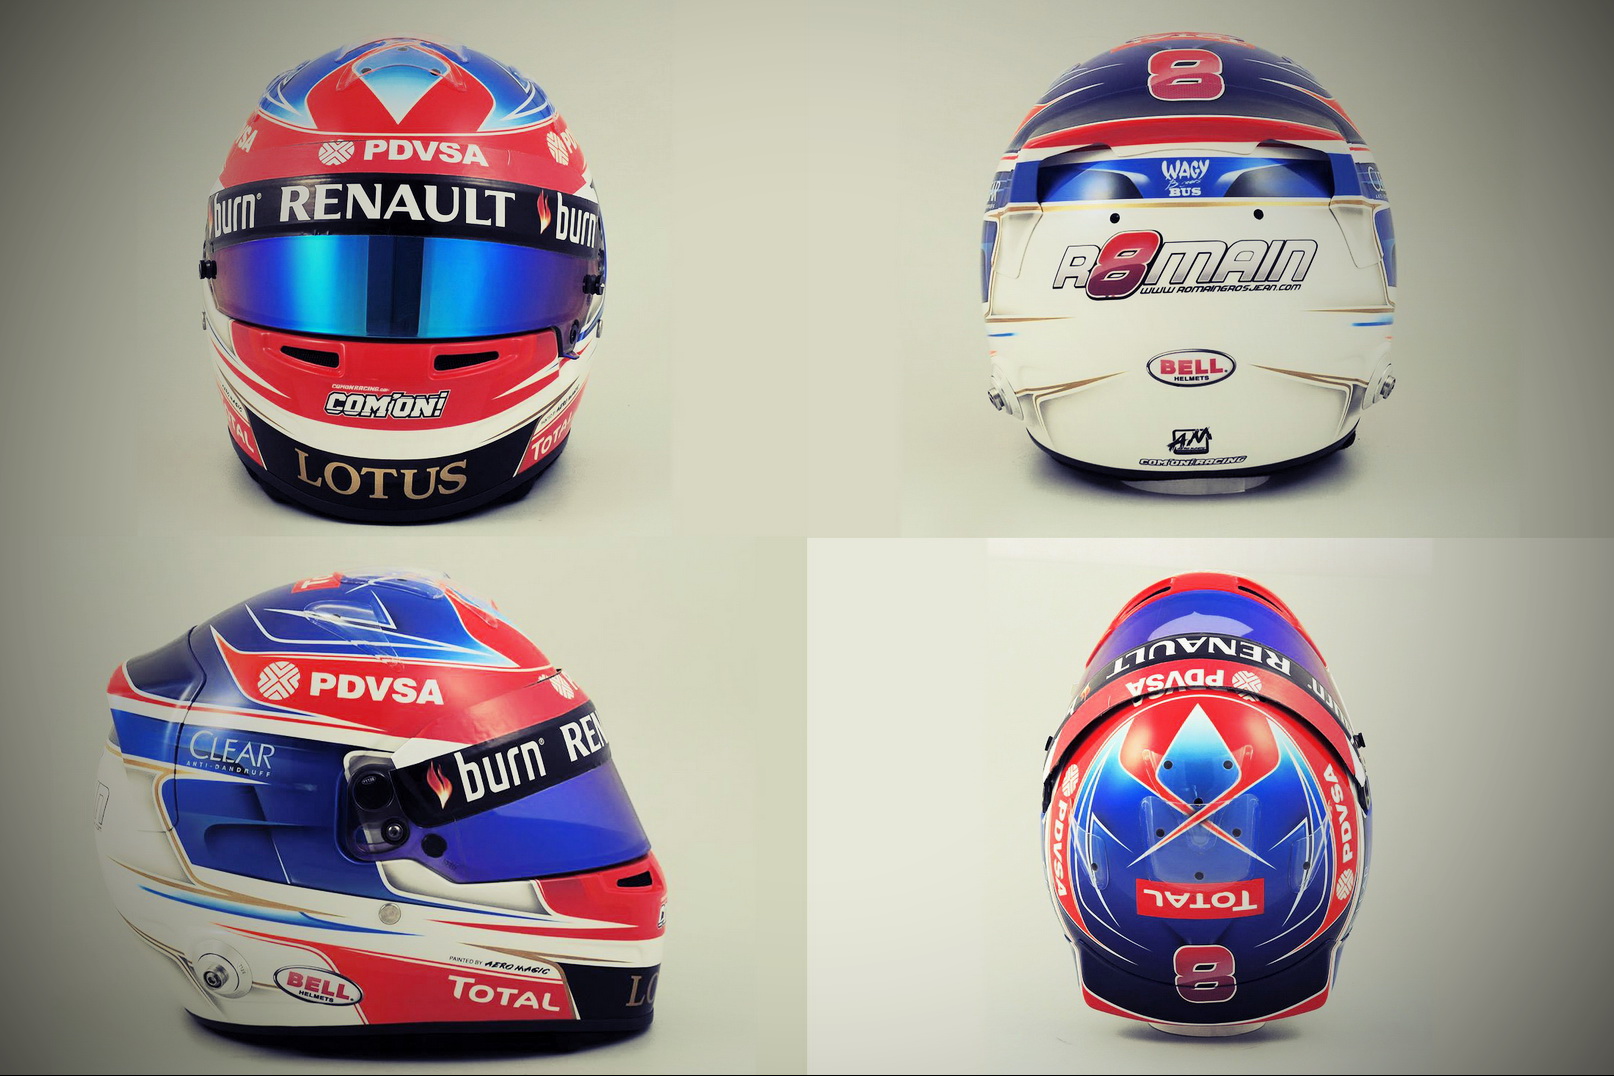 Шлем Романа Грожана на сезон 2014 года | 2014 helmet of Romain Grosjean